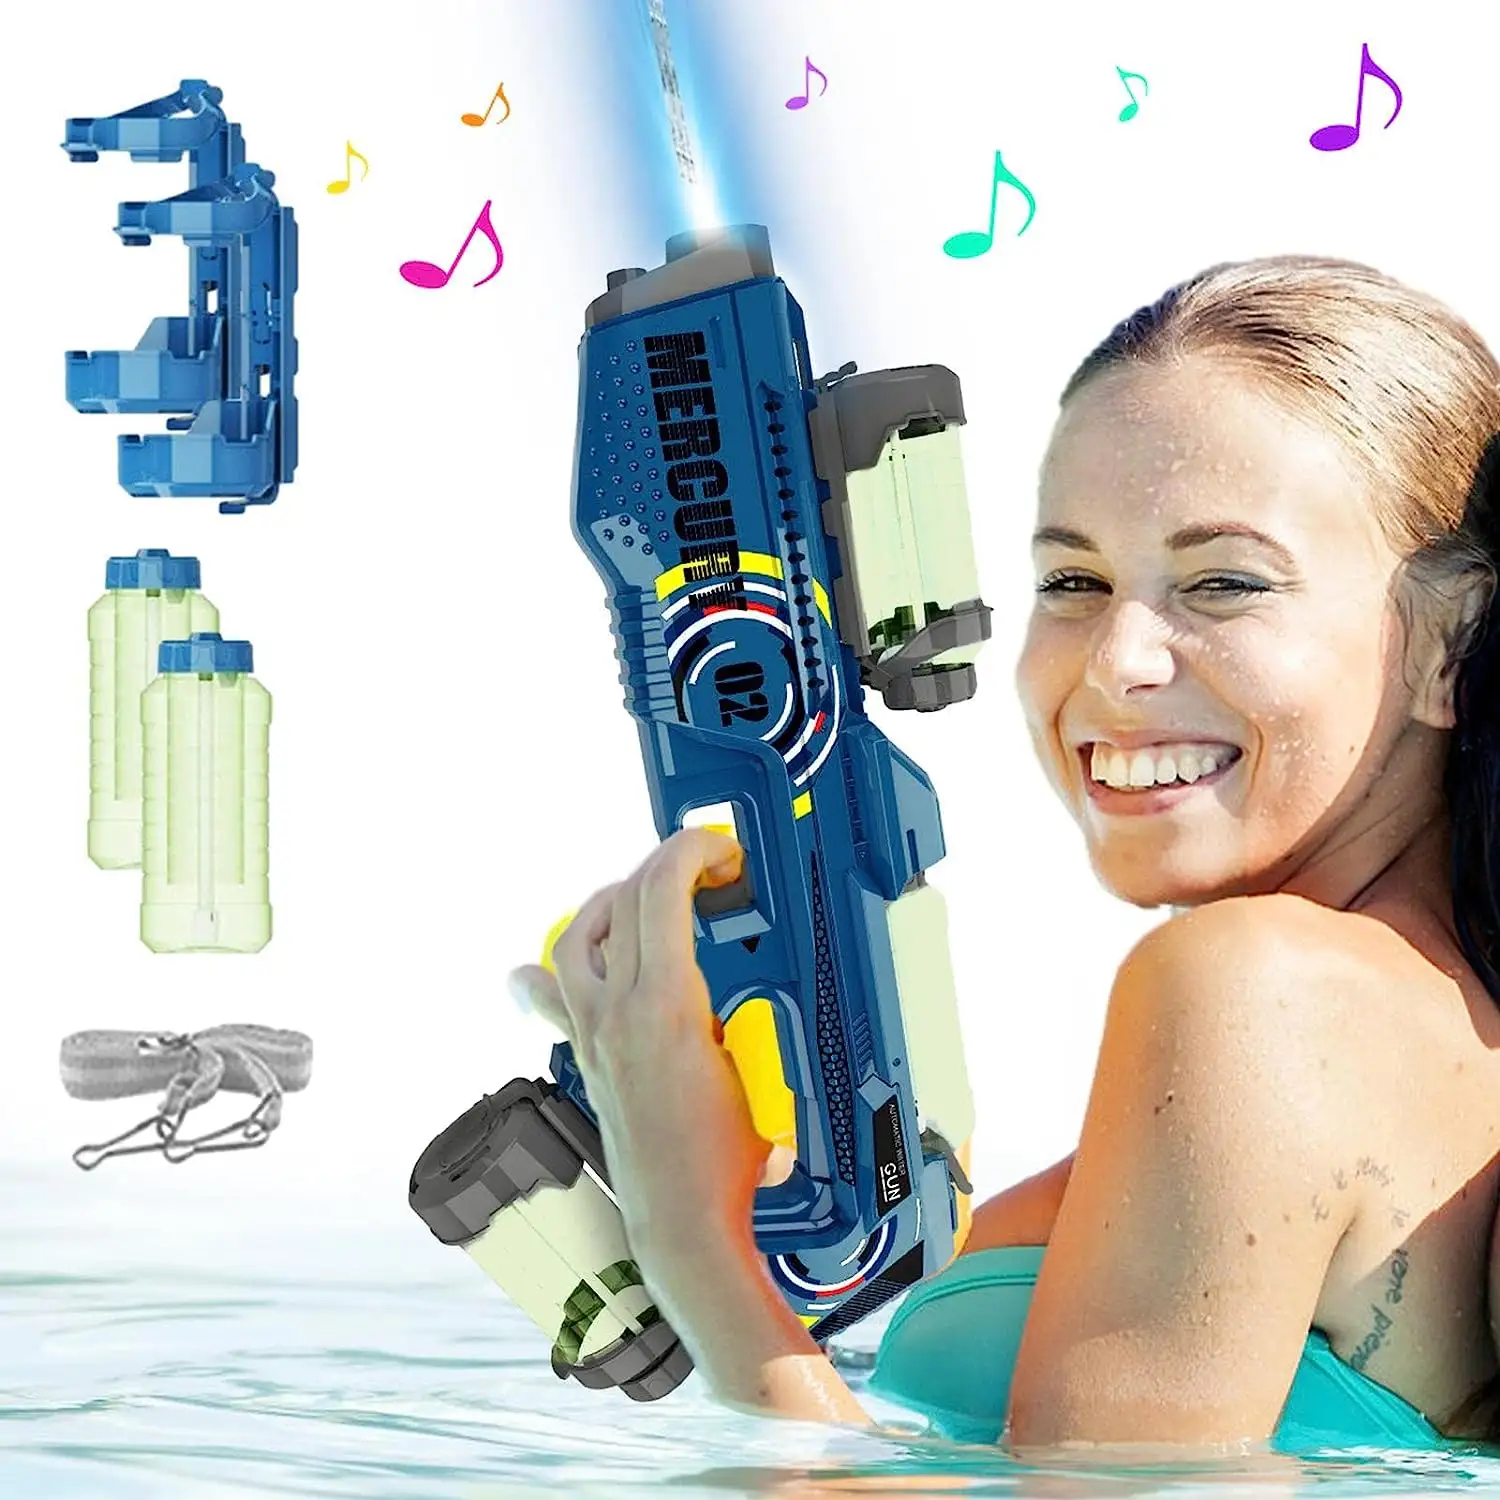 Big Capacity Water Tank Blaster Pistol Flashing LED Lights and Blasting Laser FX Sounds Electric Water Blaster